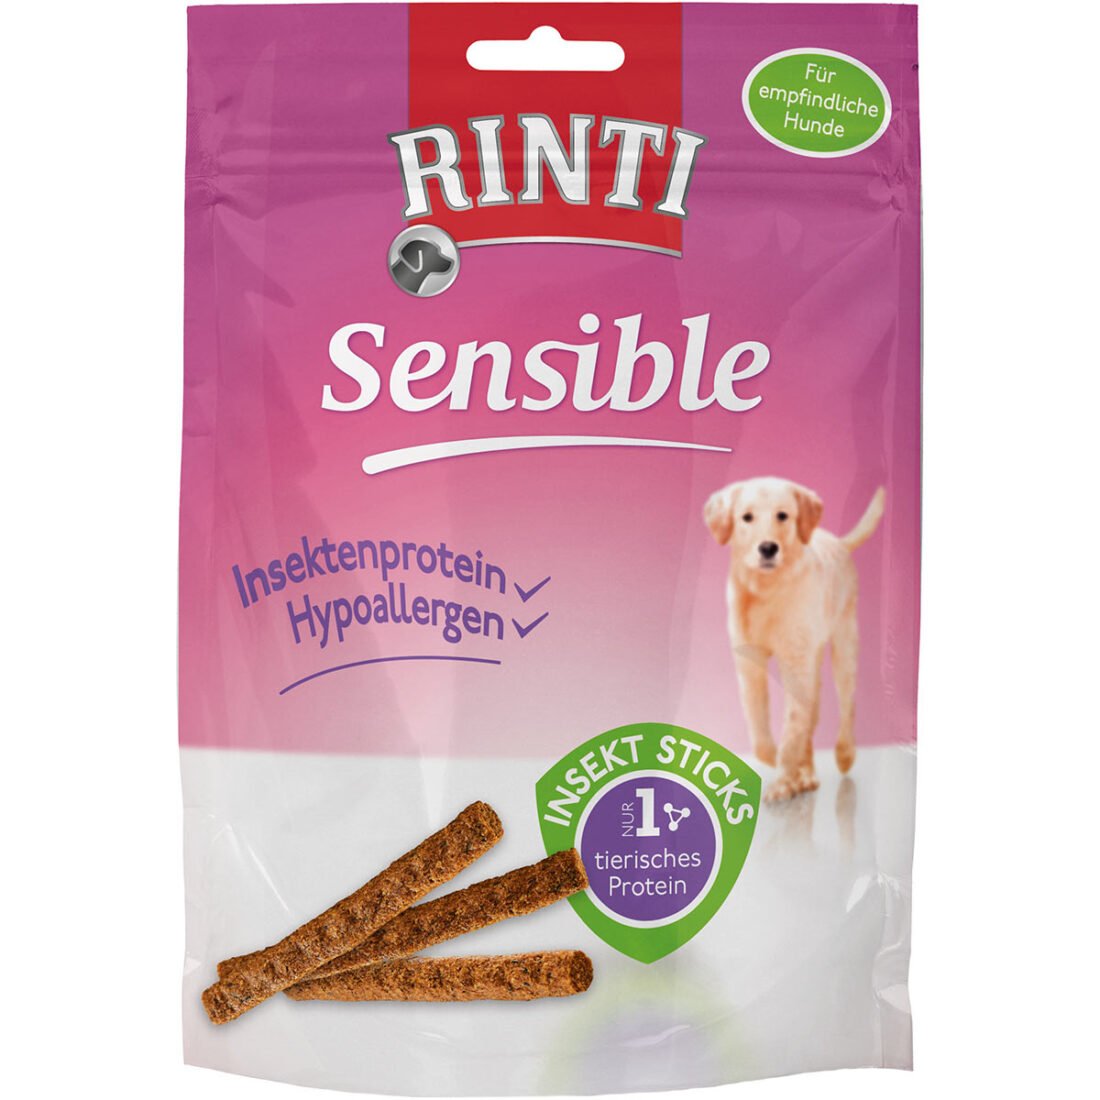 Rinti Sensible Snack Insekt Sticks